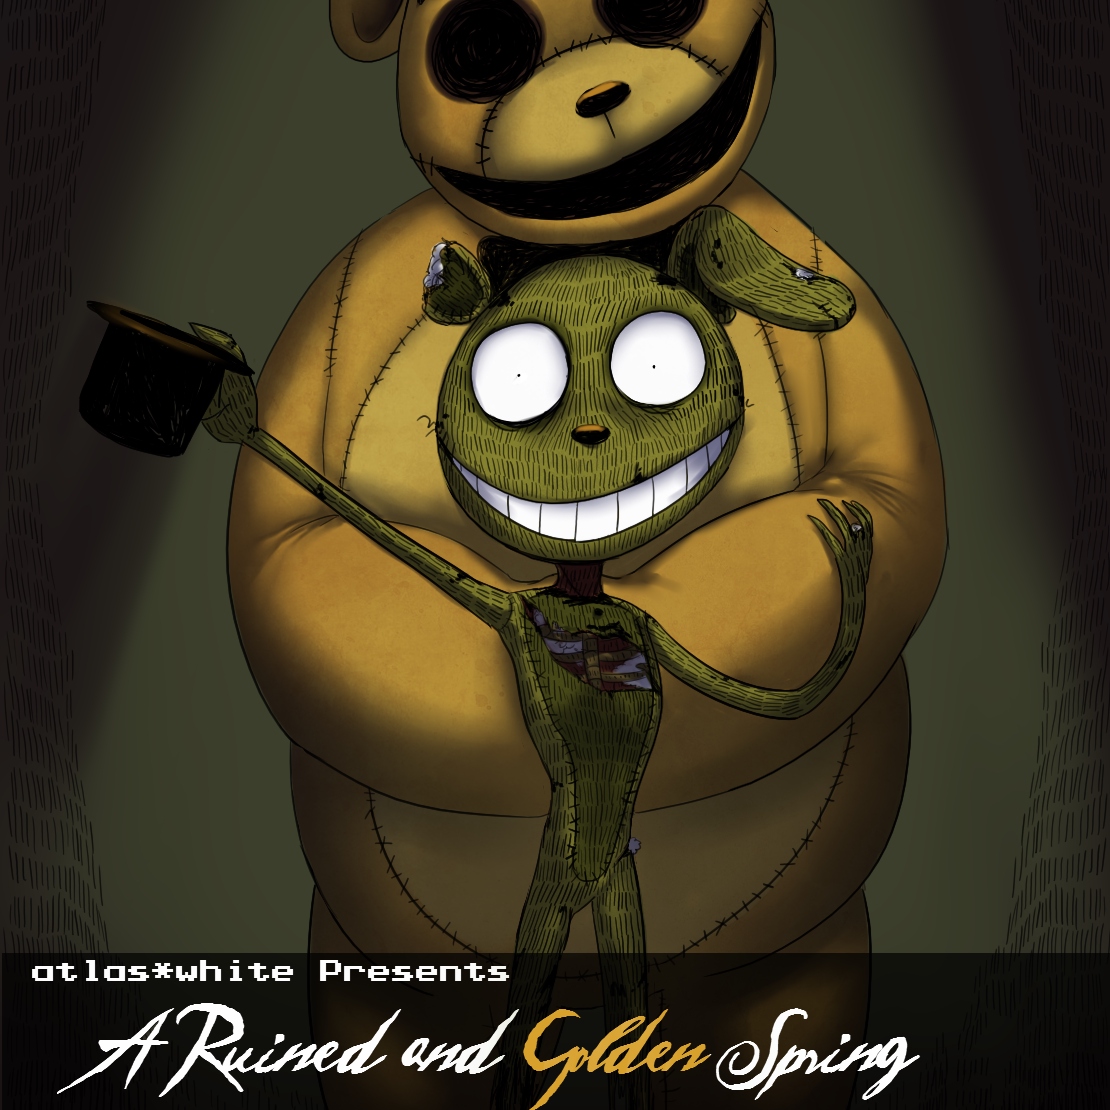 Golden Freddy & Spring Trap